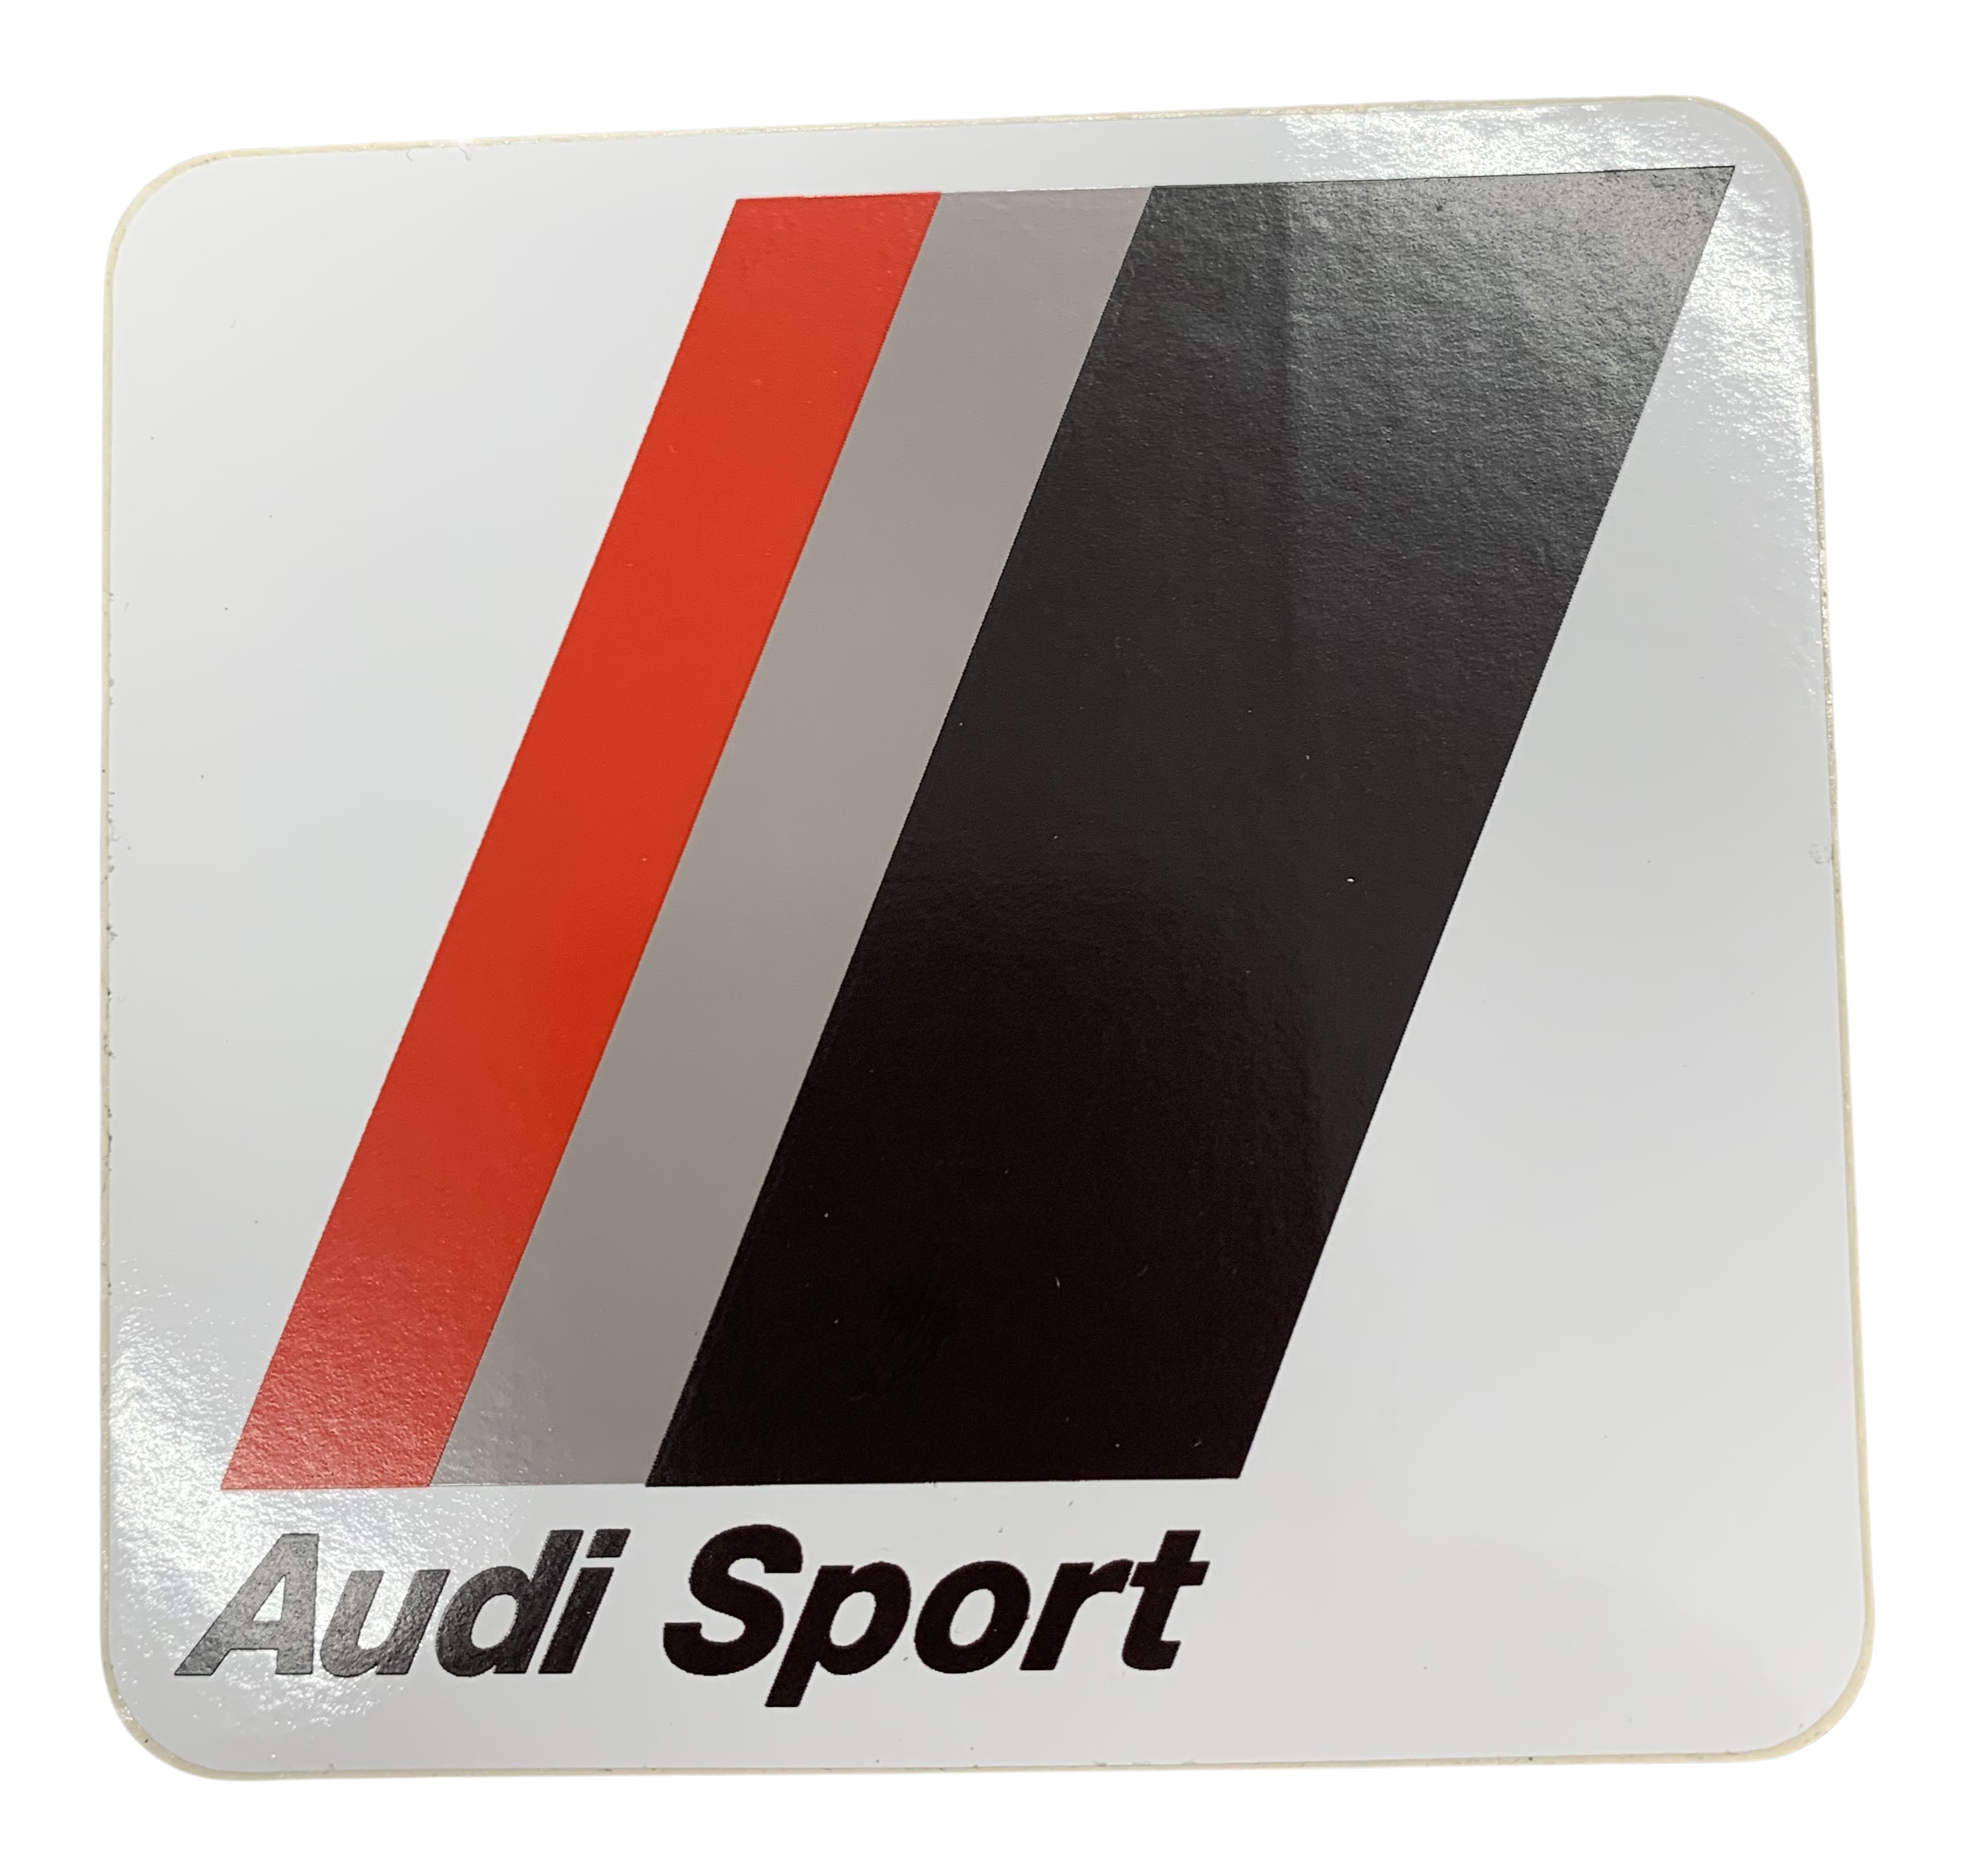 Original Audi Sport Sticker 7x7cm Adhesive